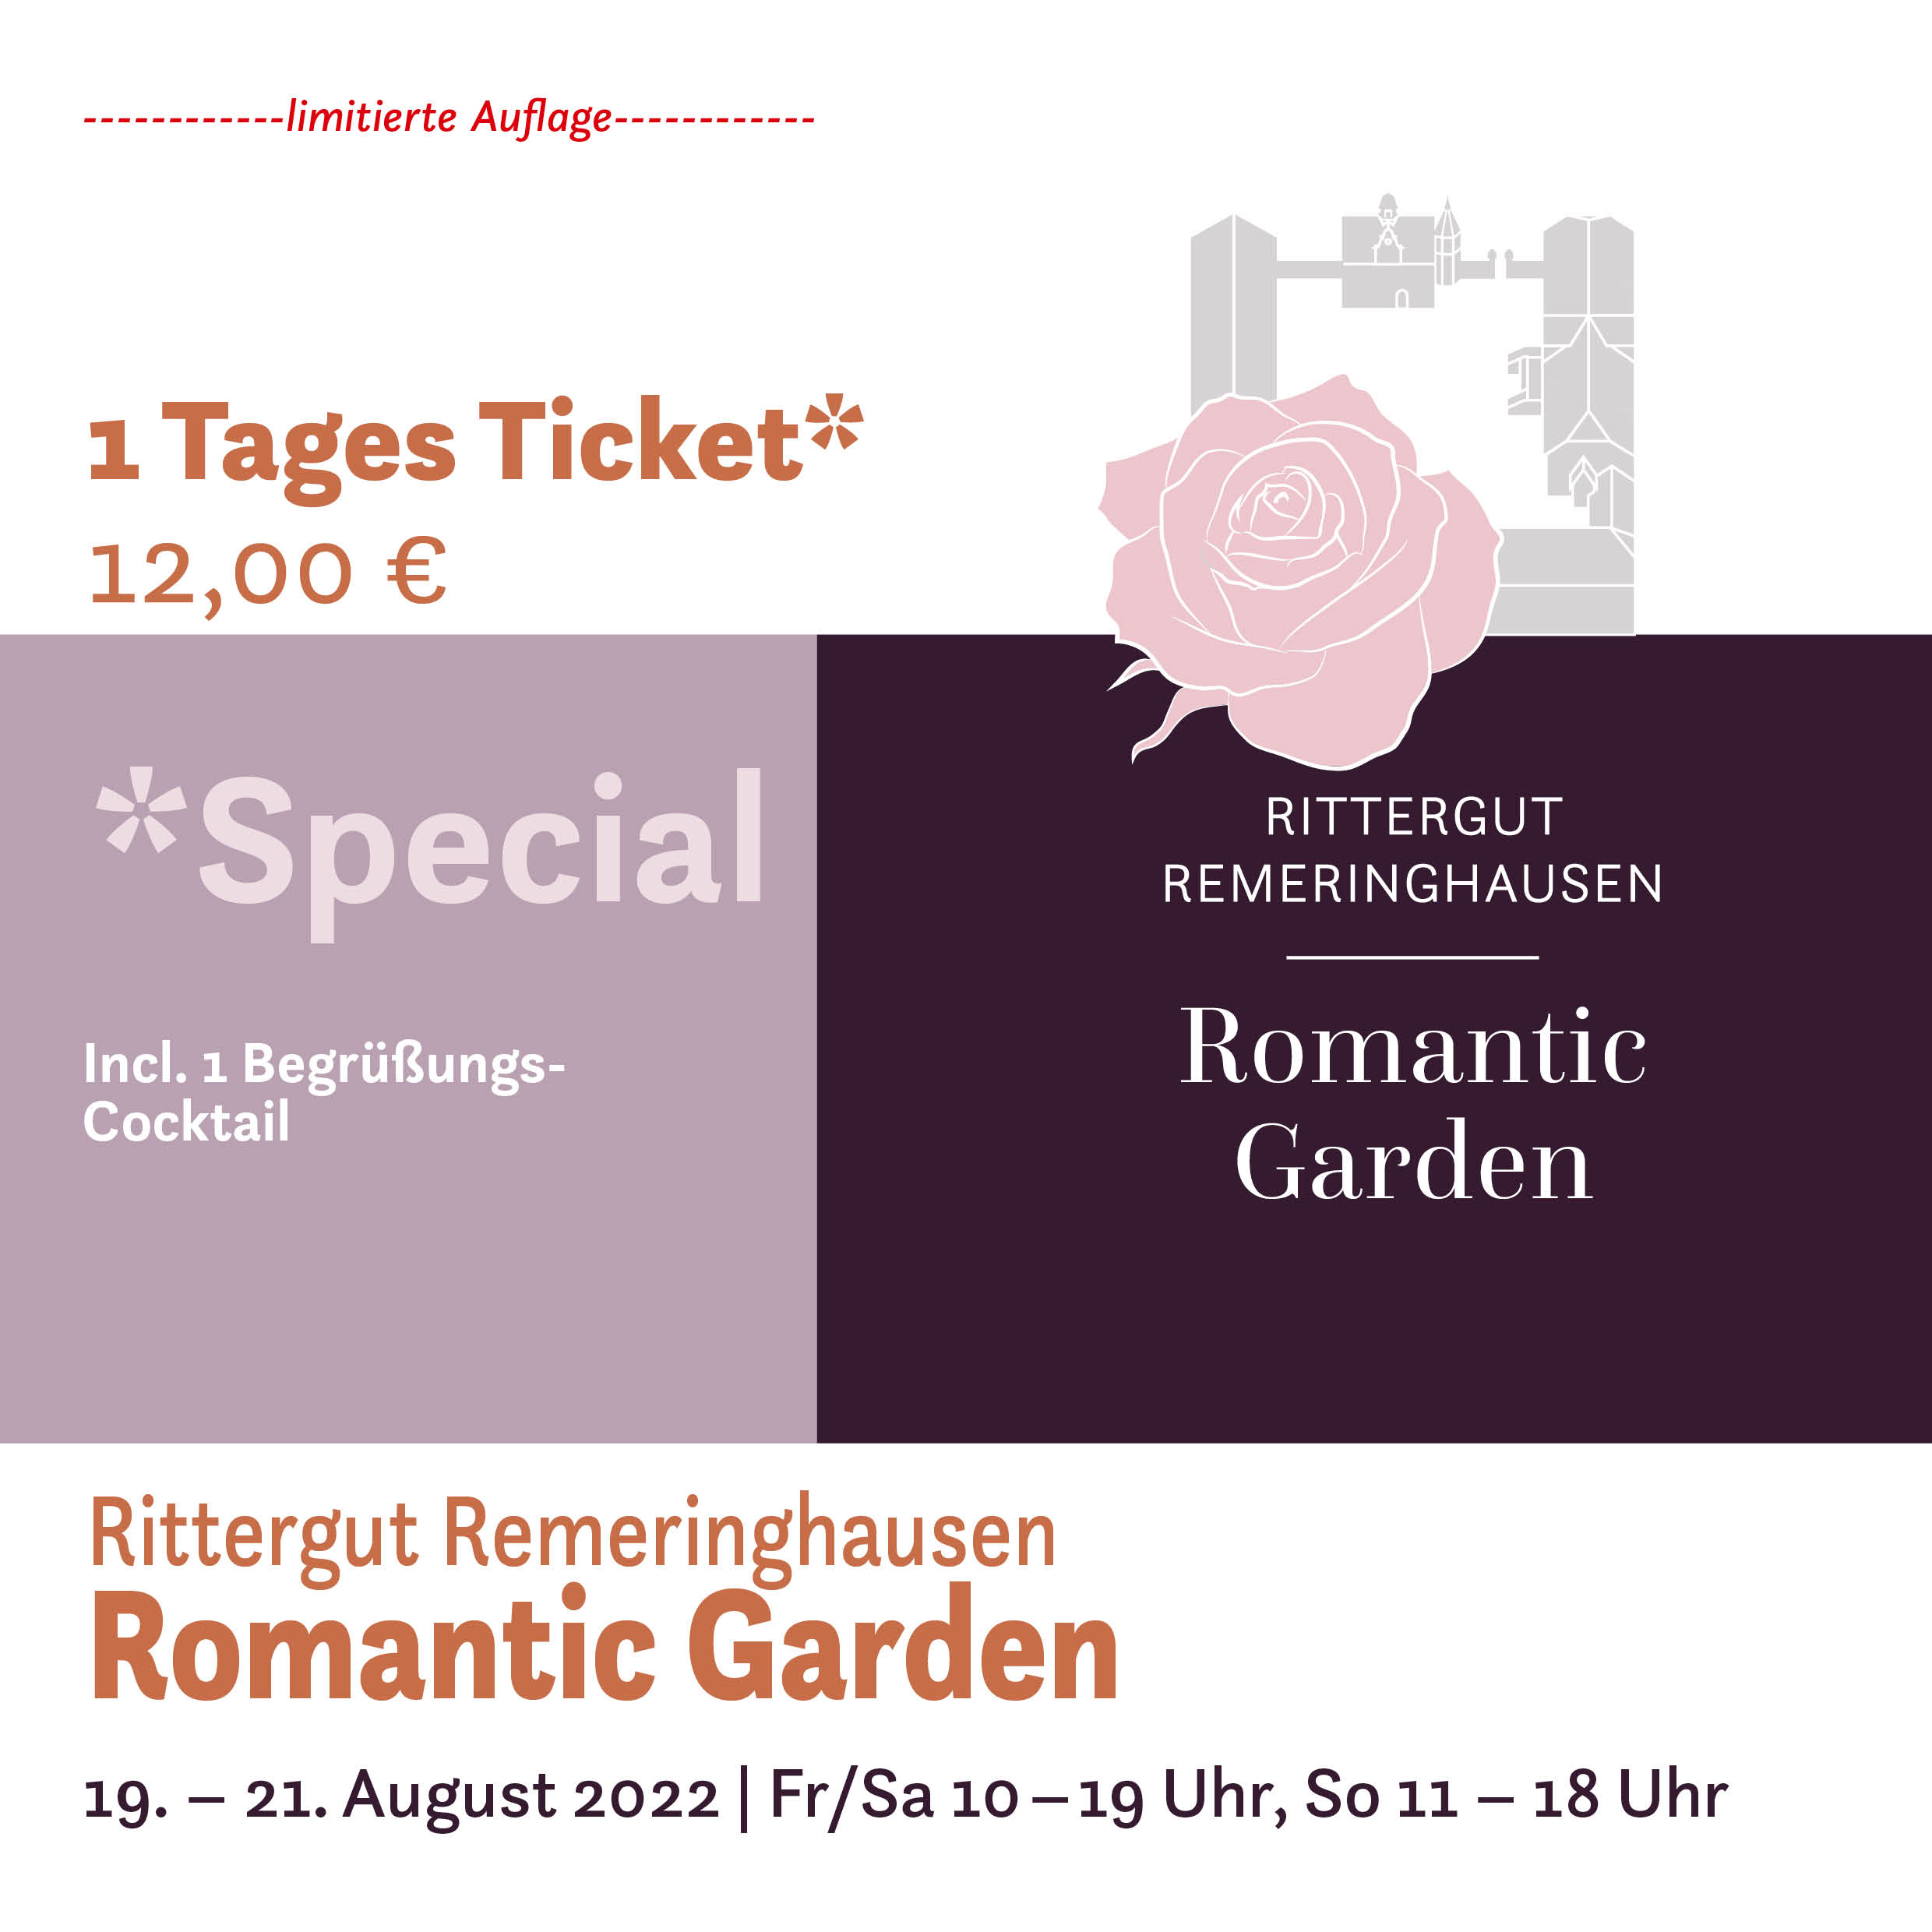 Romantic Garden 2022 - 1 Tages Ticket  (Special)